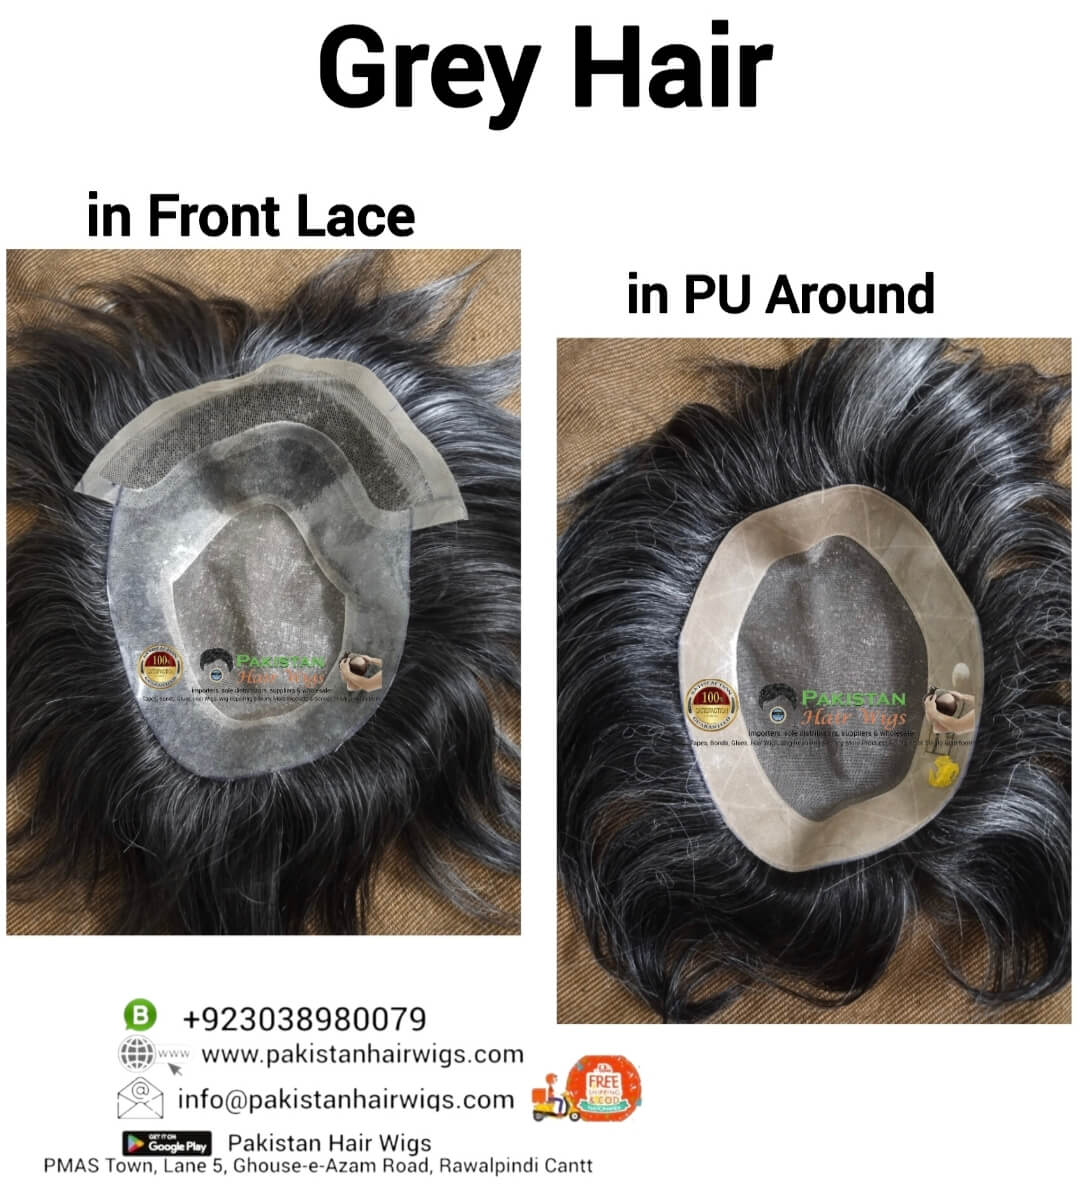 grey hair patch, white hair patch, grey hair wig, white hair wig, grey hair customize patch, grey white hair wig, 1